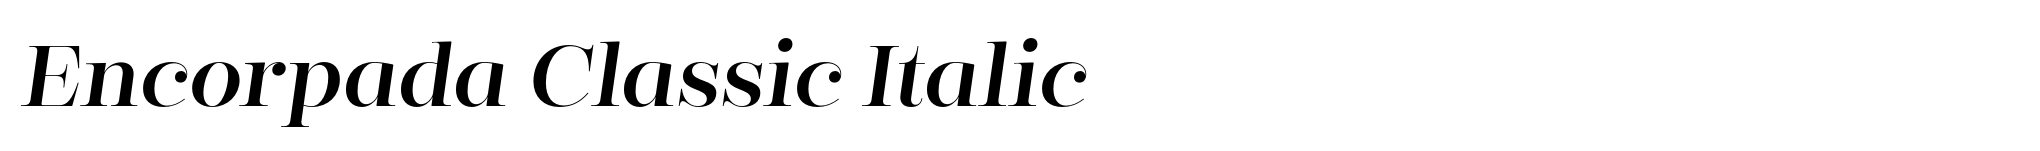 Encorpada Classic Italic image